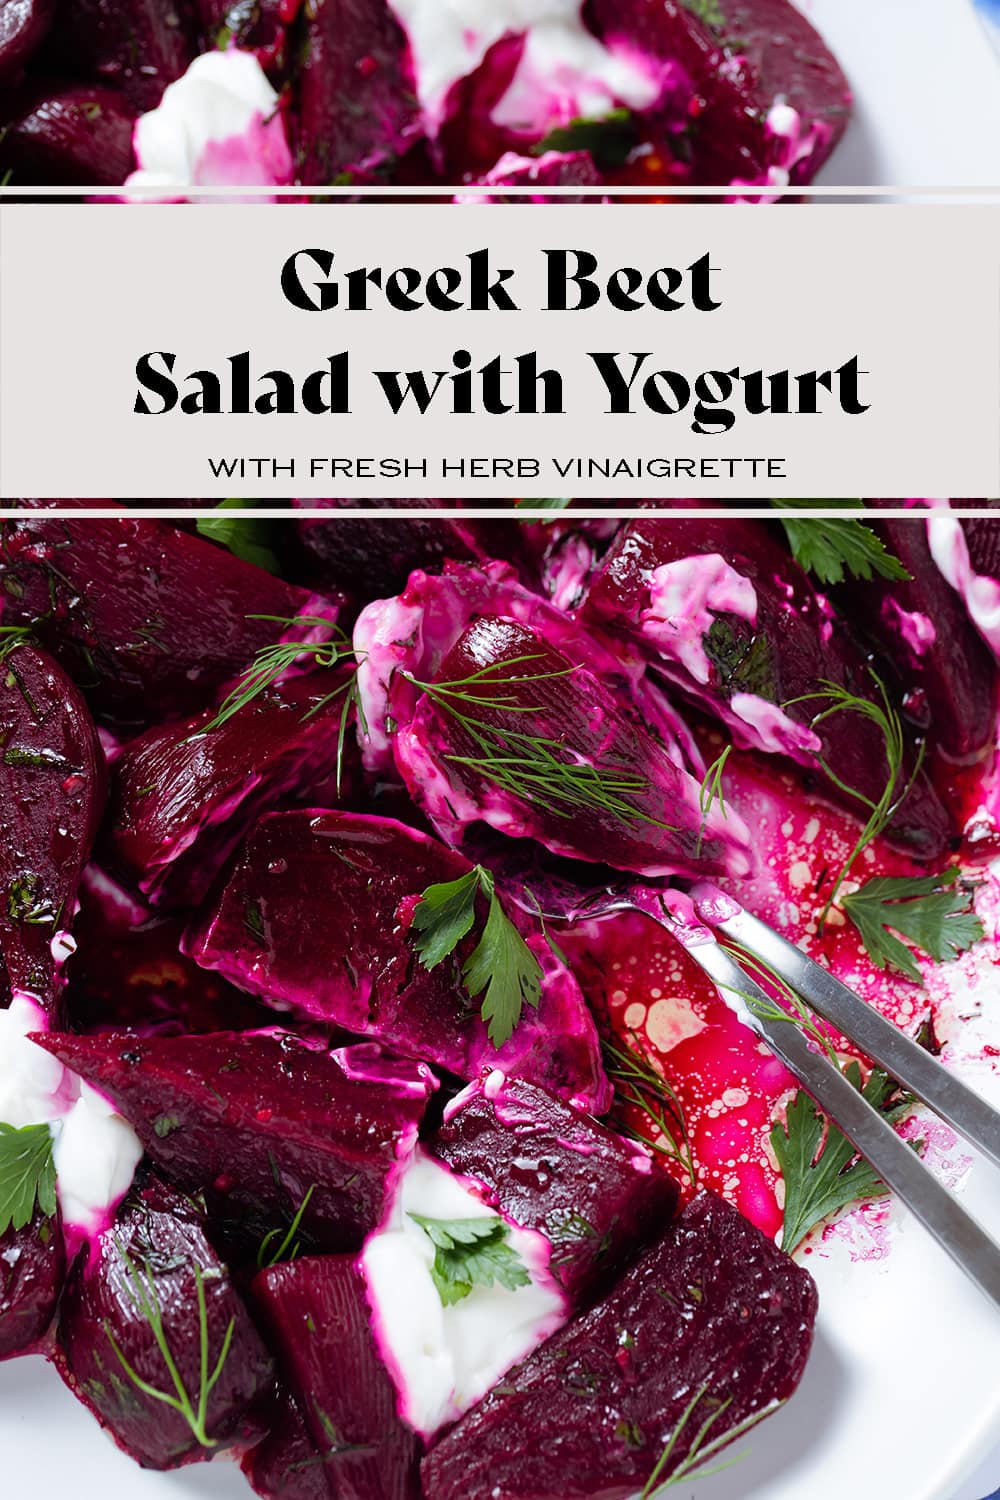 Greek Beet Salad with Yogurt